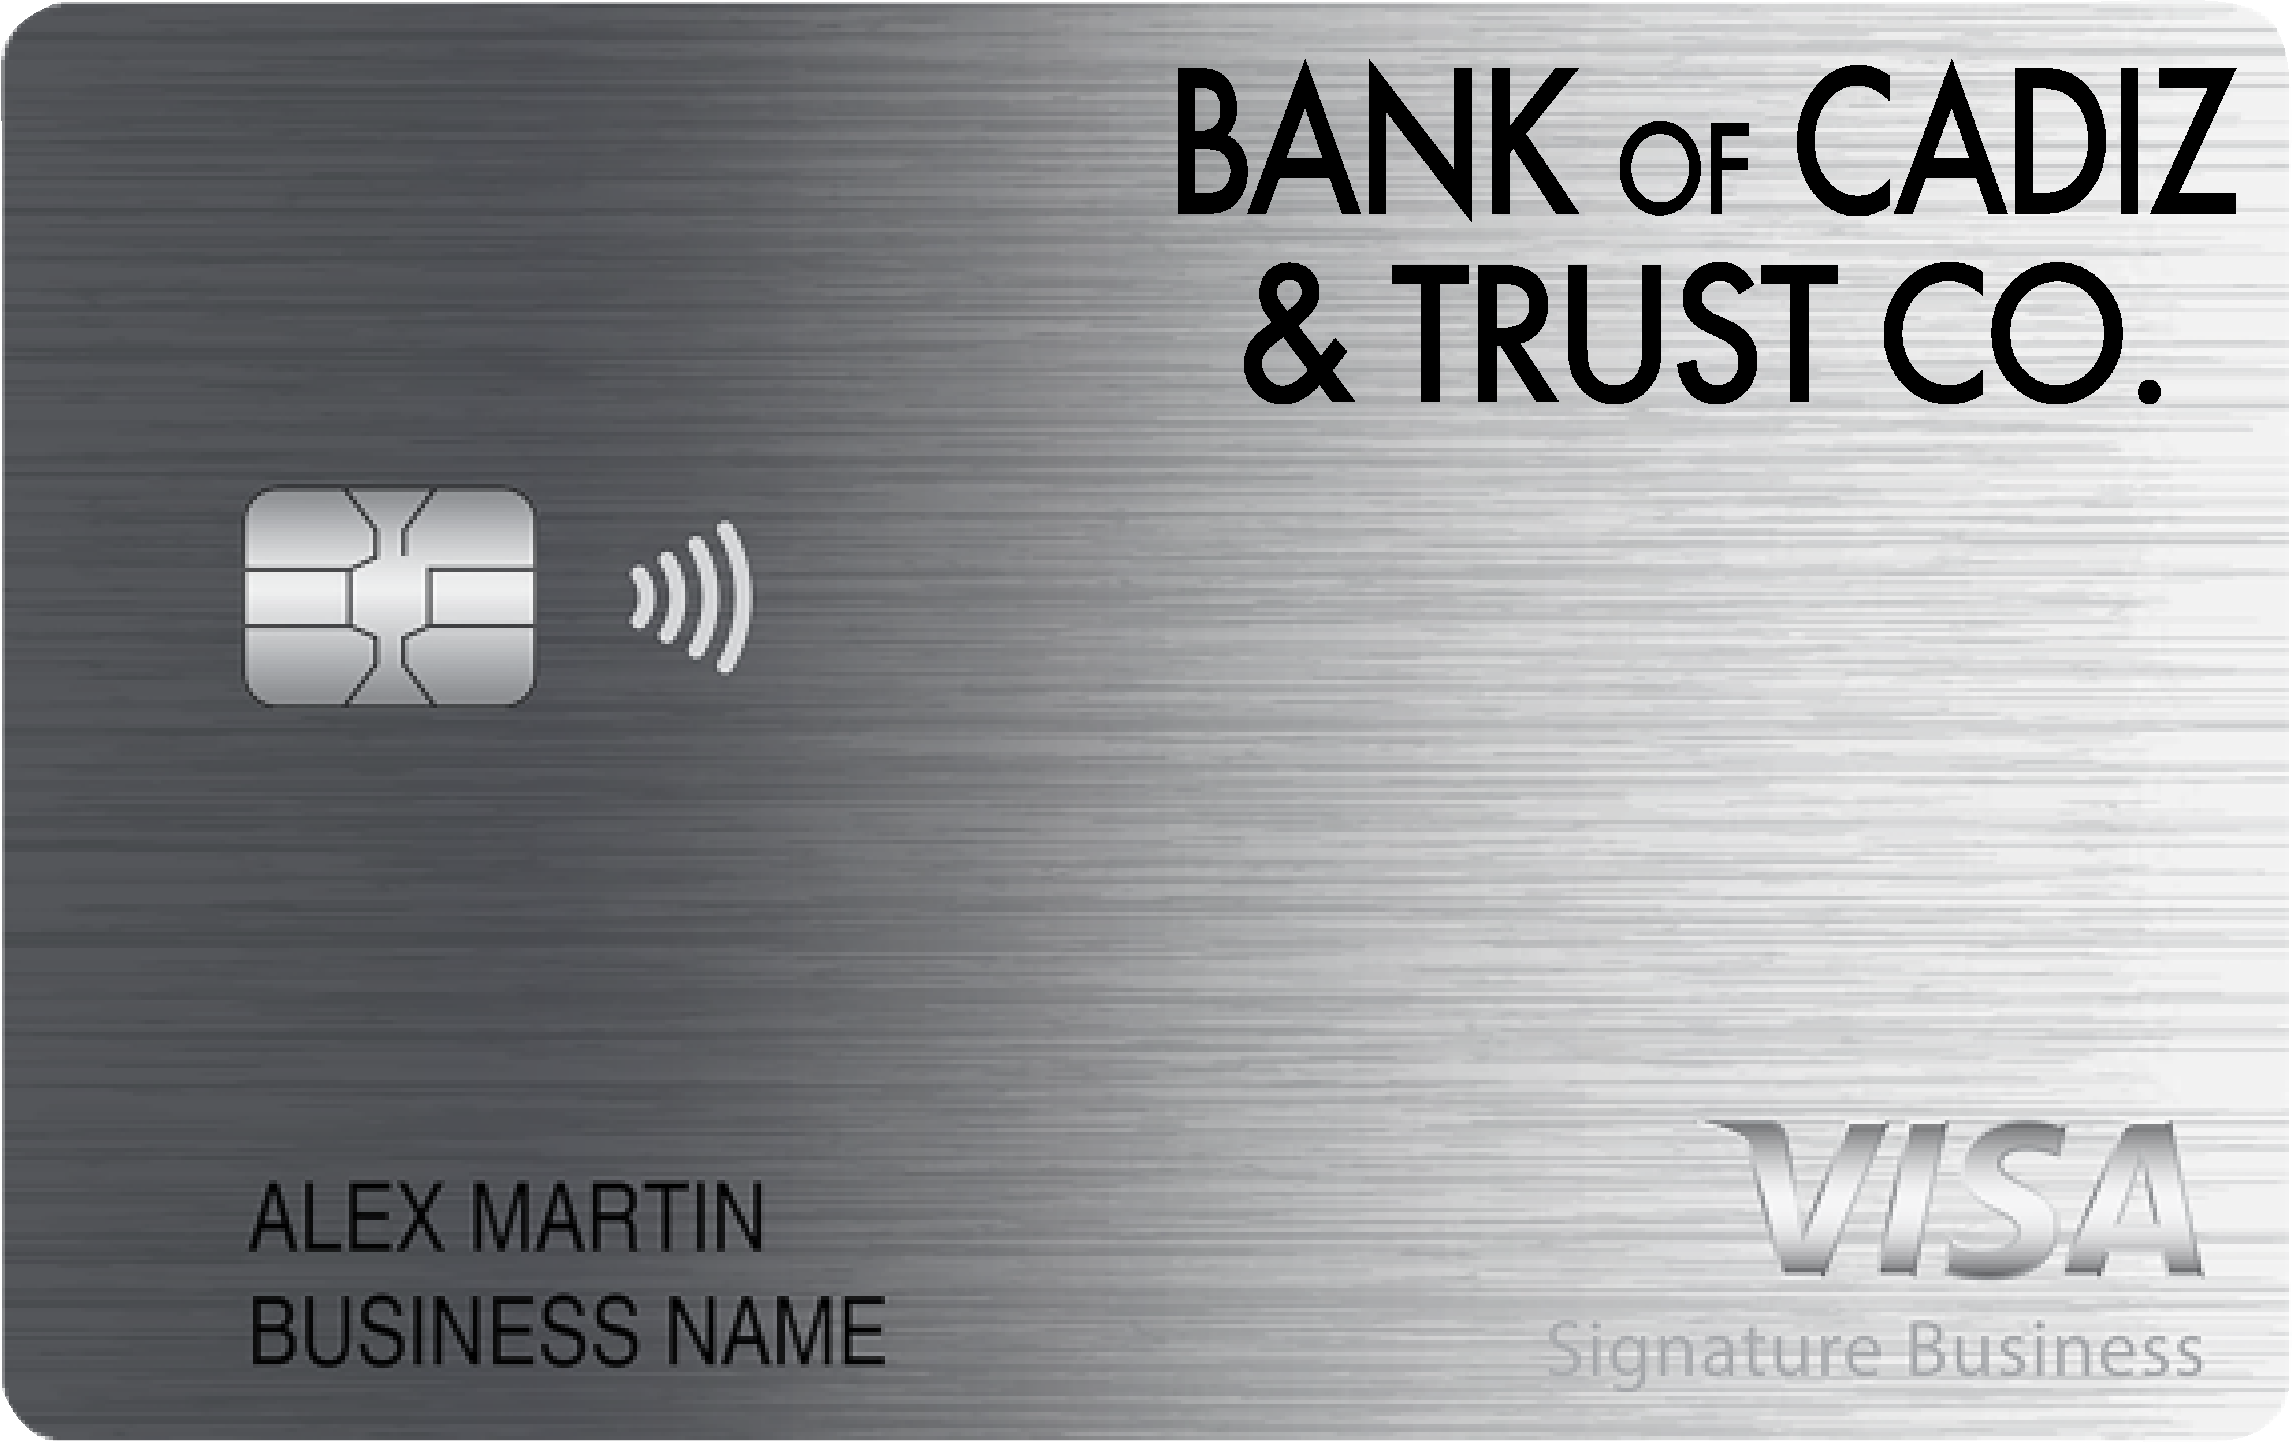 Bank of Cadiz & Trust Company Smart Business Rewards Card